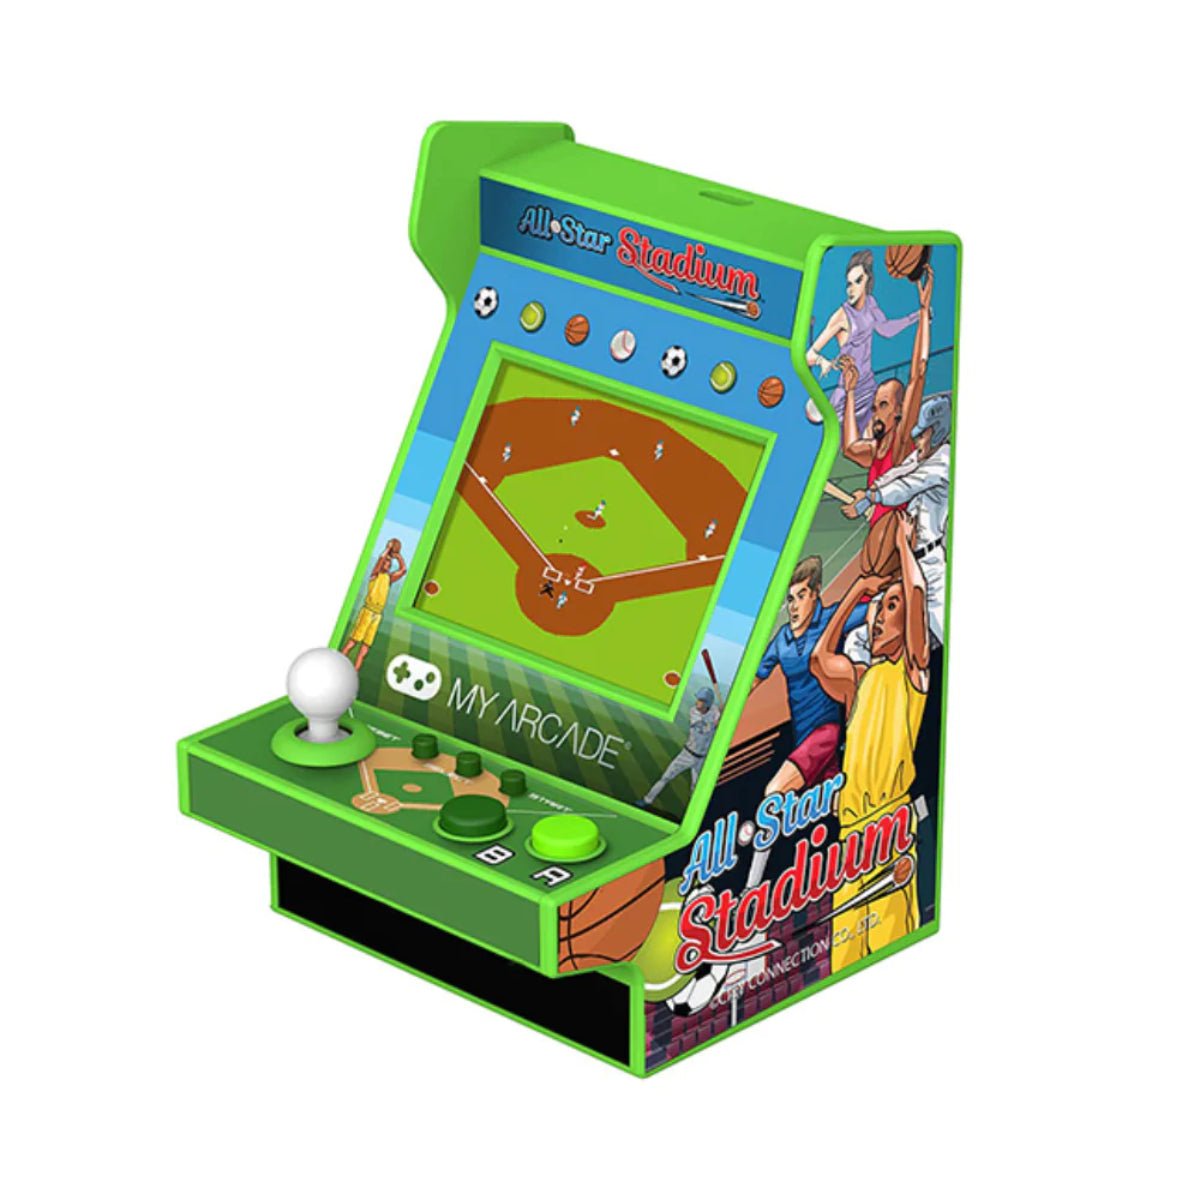 My Arcade All-Star Arena +200 Bonus Games Collectible Retro - Green/White - ماكينة ألعاب - Store 974 | ستور ٩٧٤